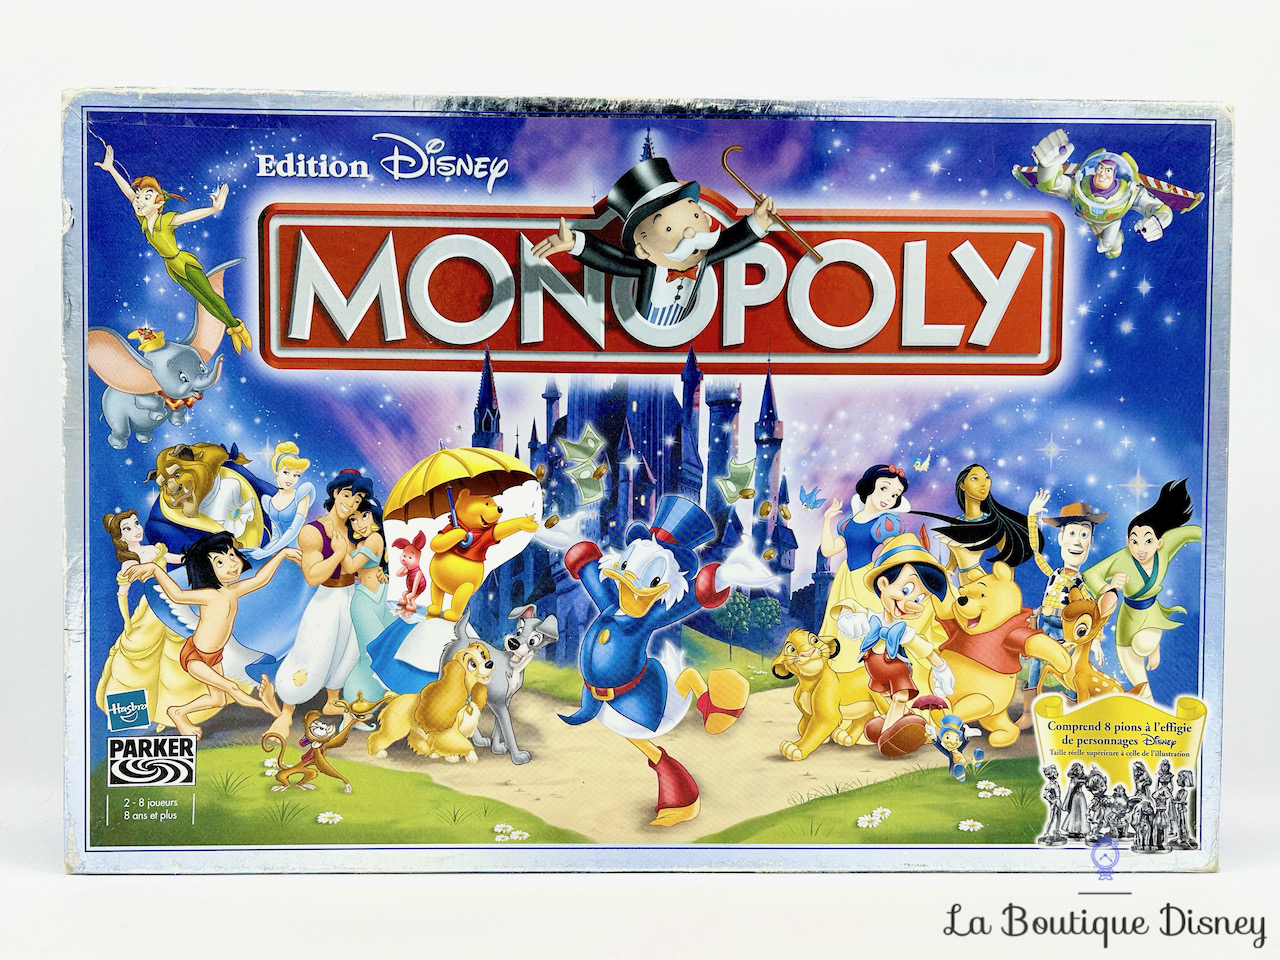 jeu-de-société-monopoly-edition-disney-parker-hasbro-2001-0